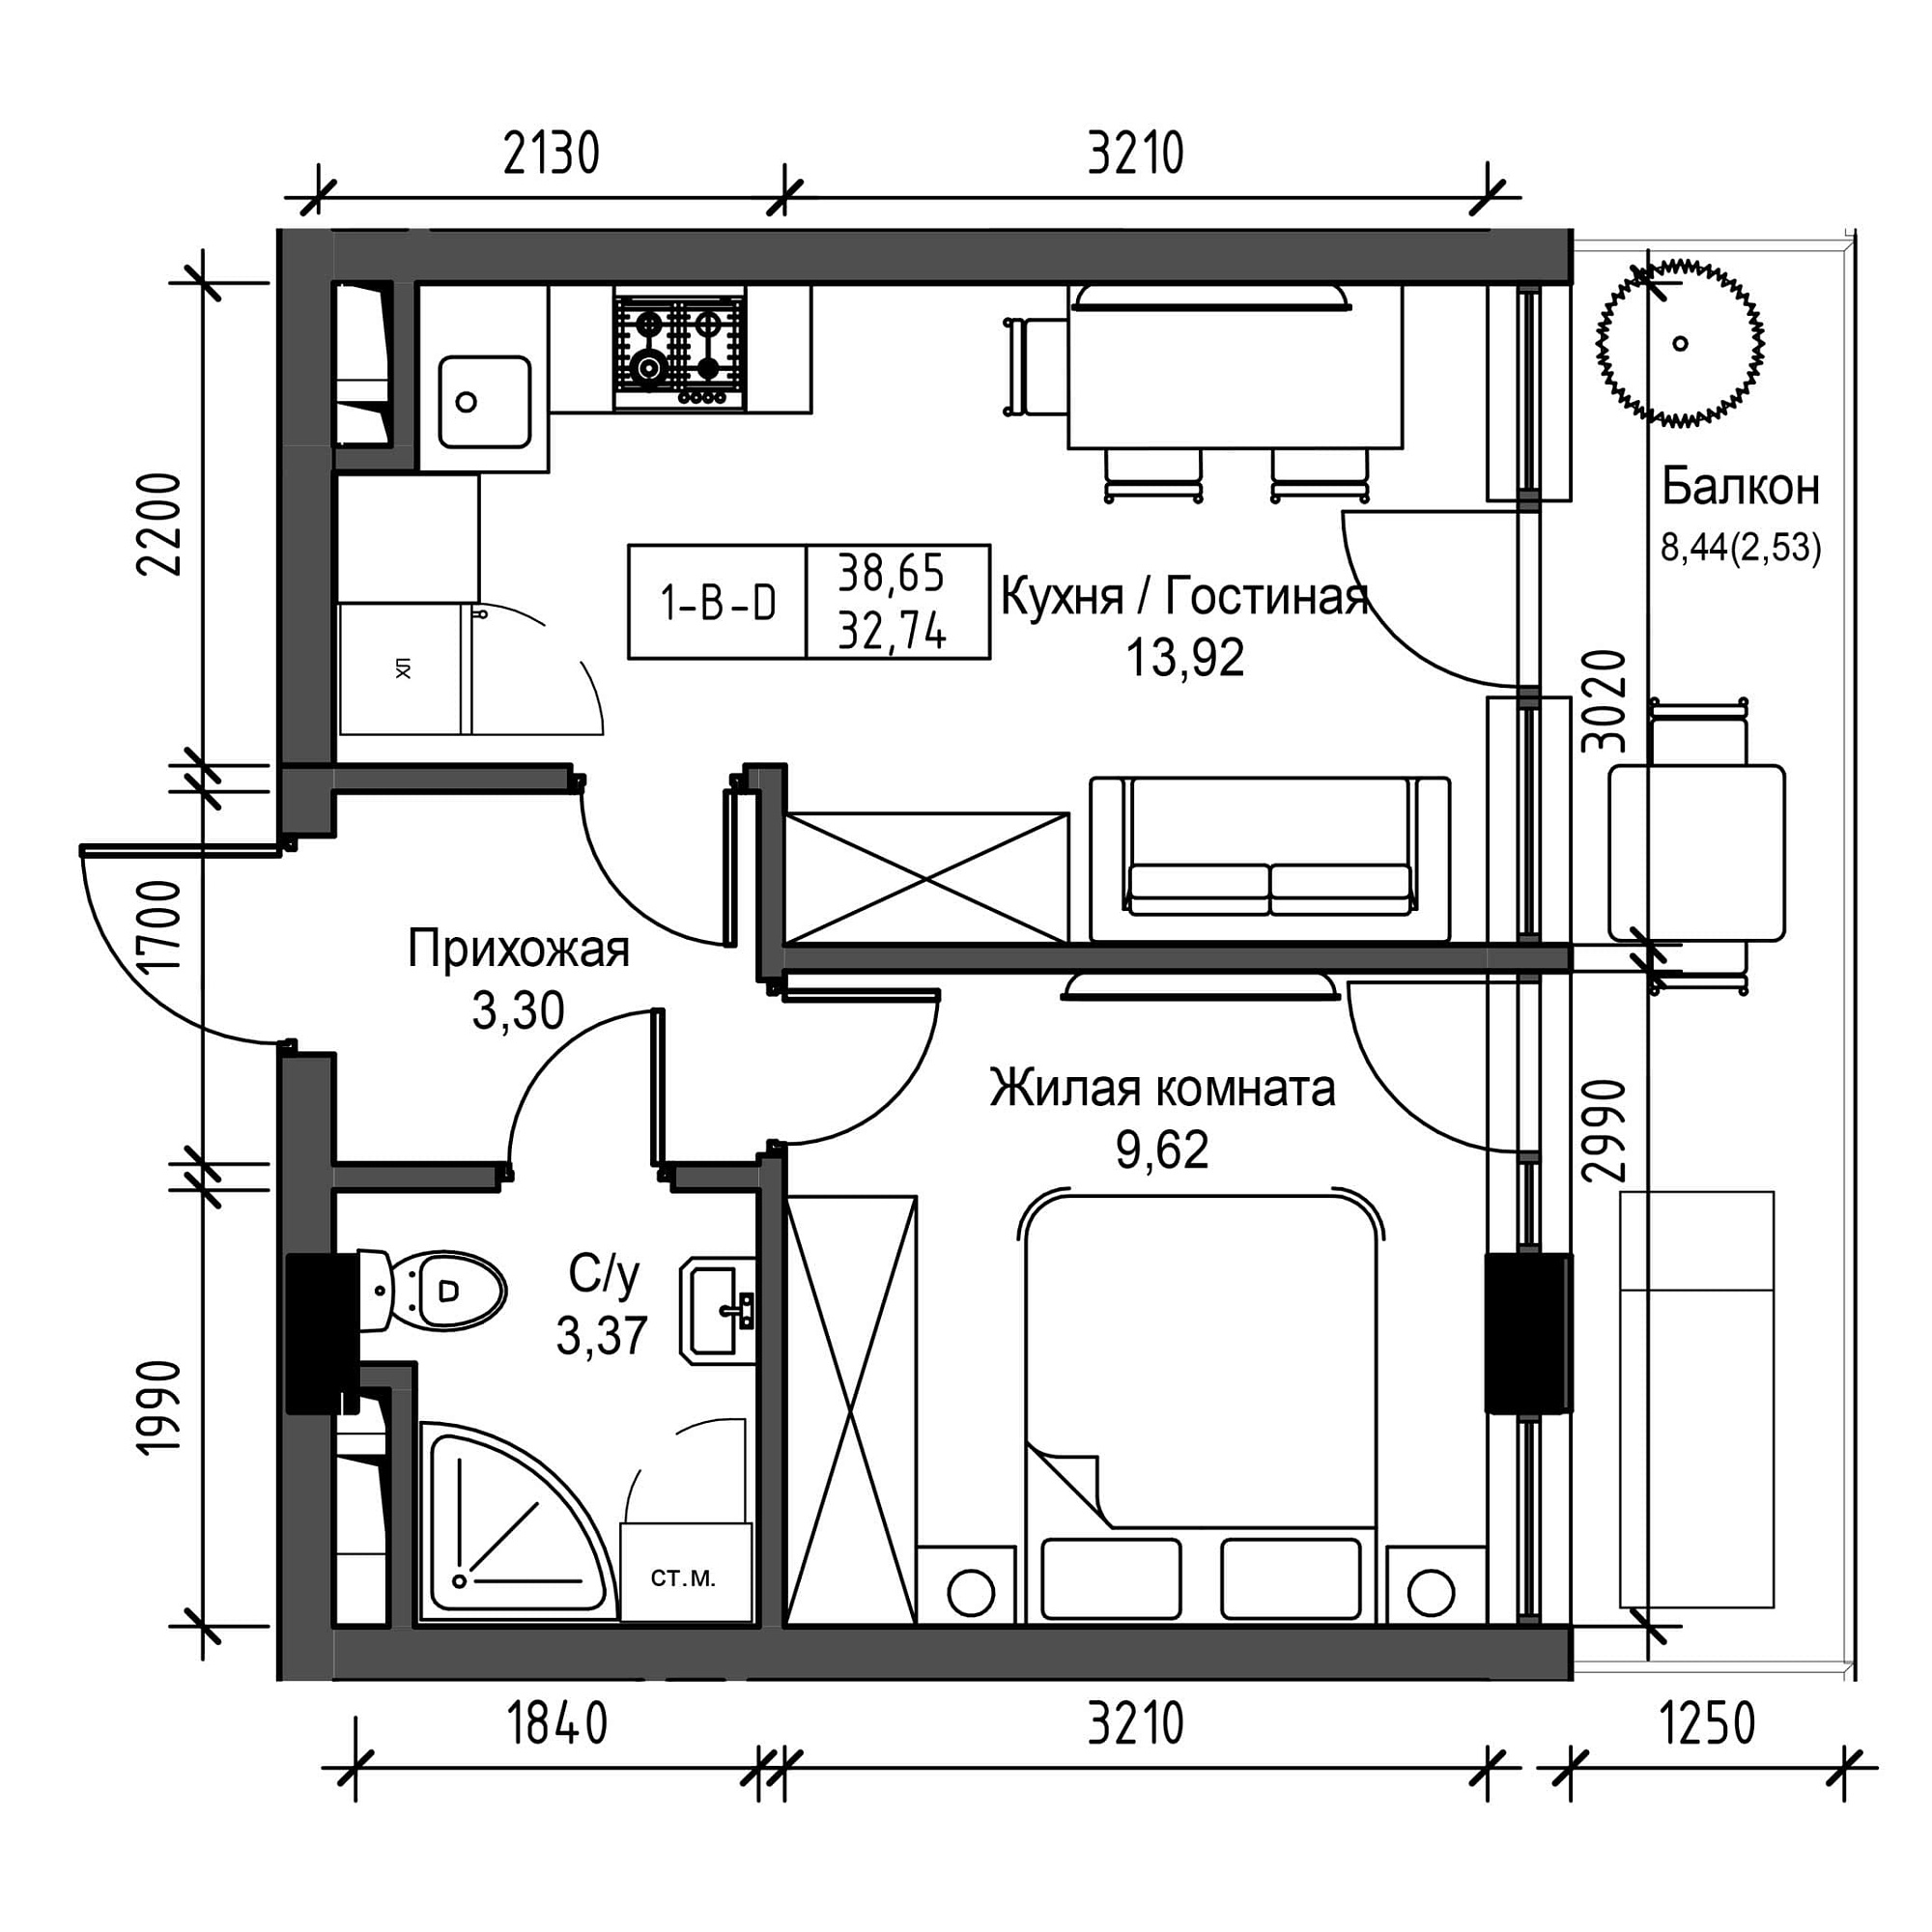 Планування 1-к квартира площею 32.74м2, UM-001-05/0022.